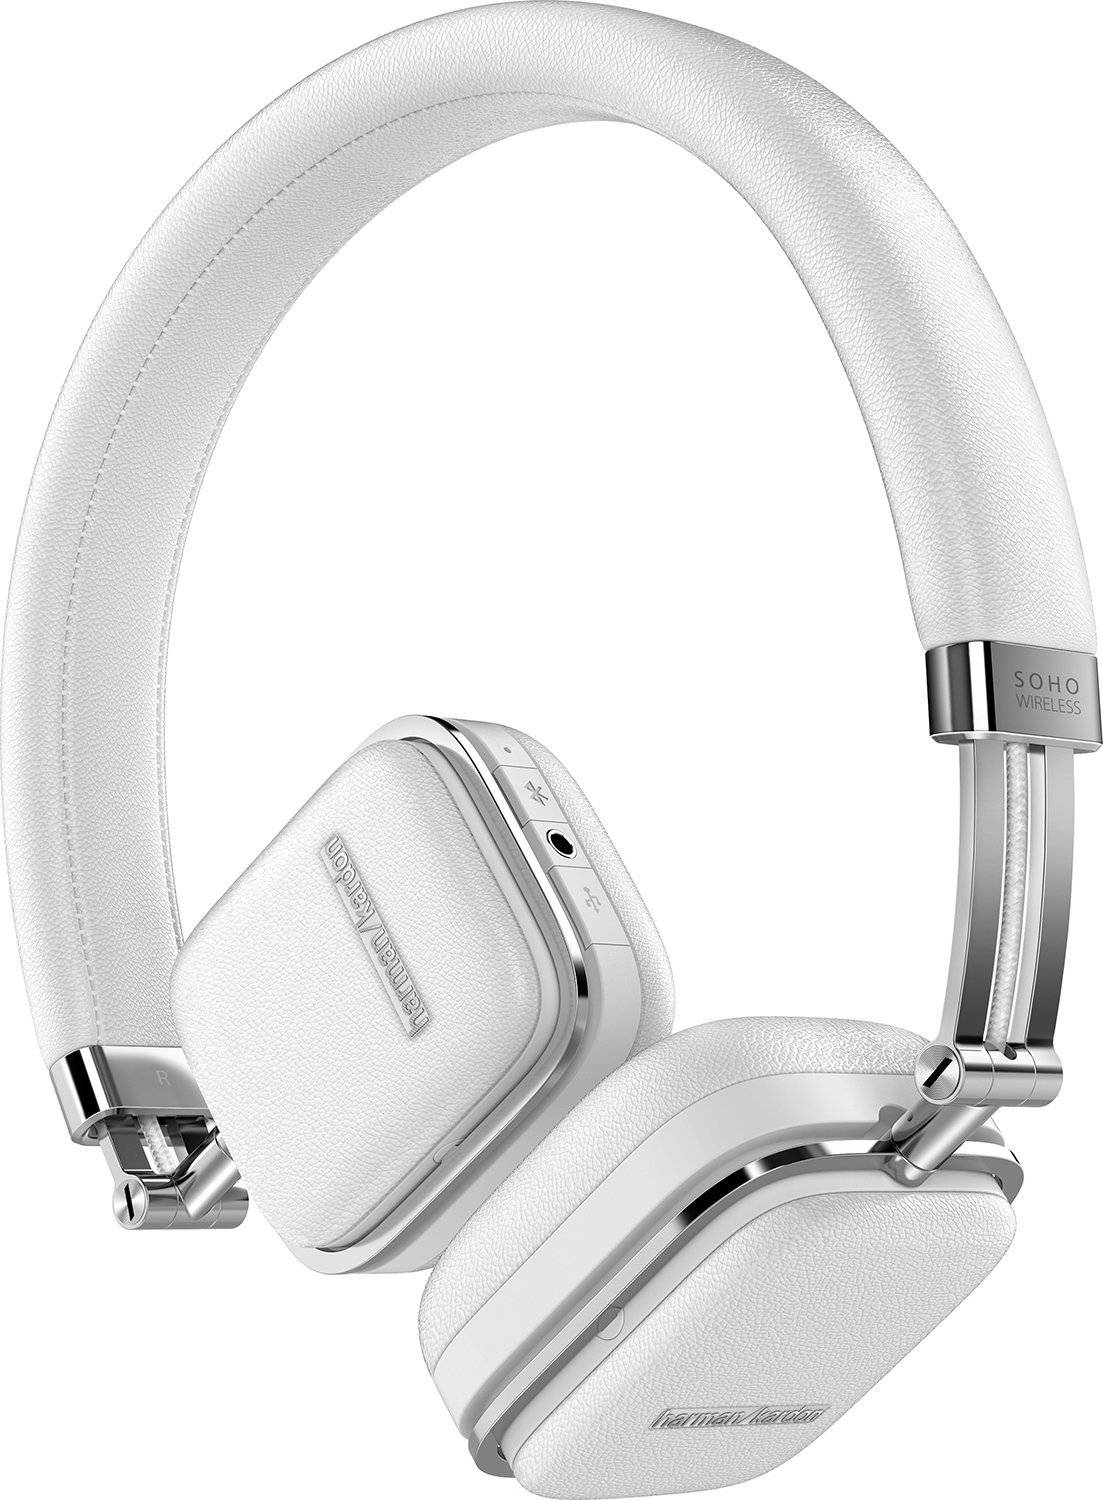 Bezdrátová sluchátka na uši Harman Kardon Soho Wireless White